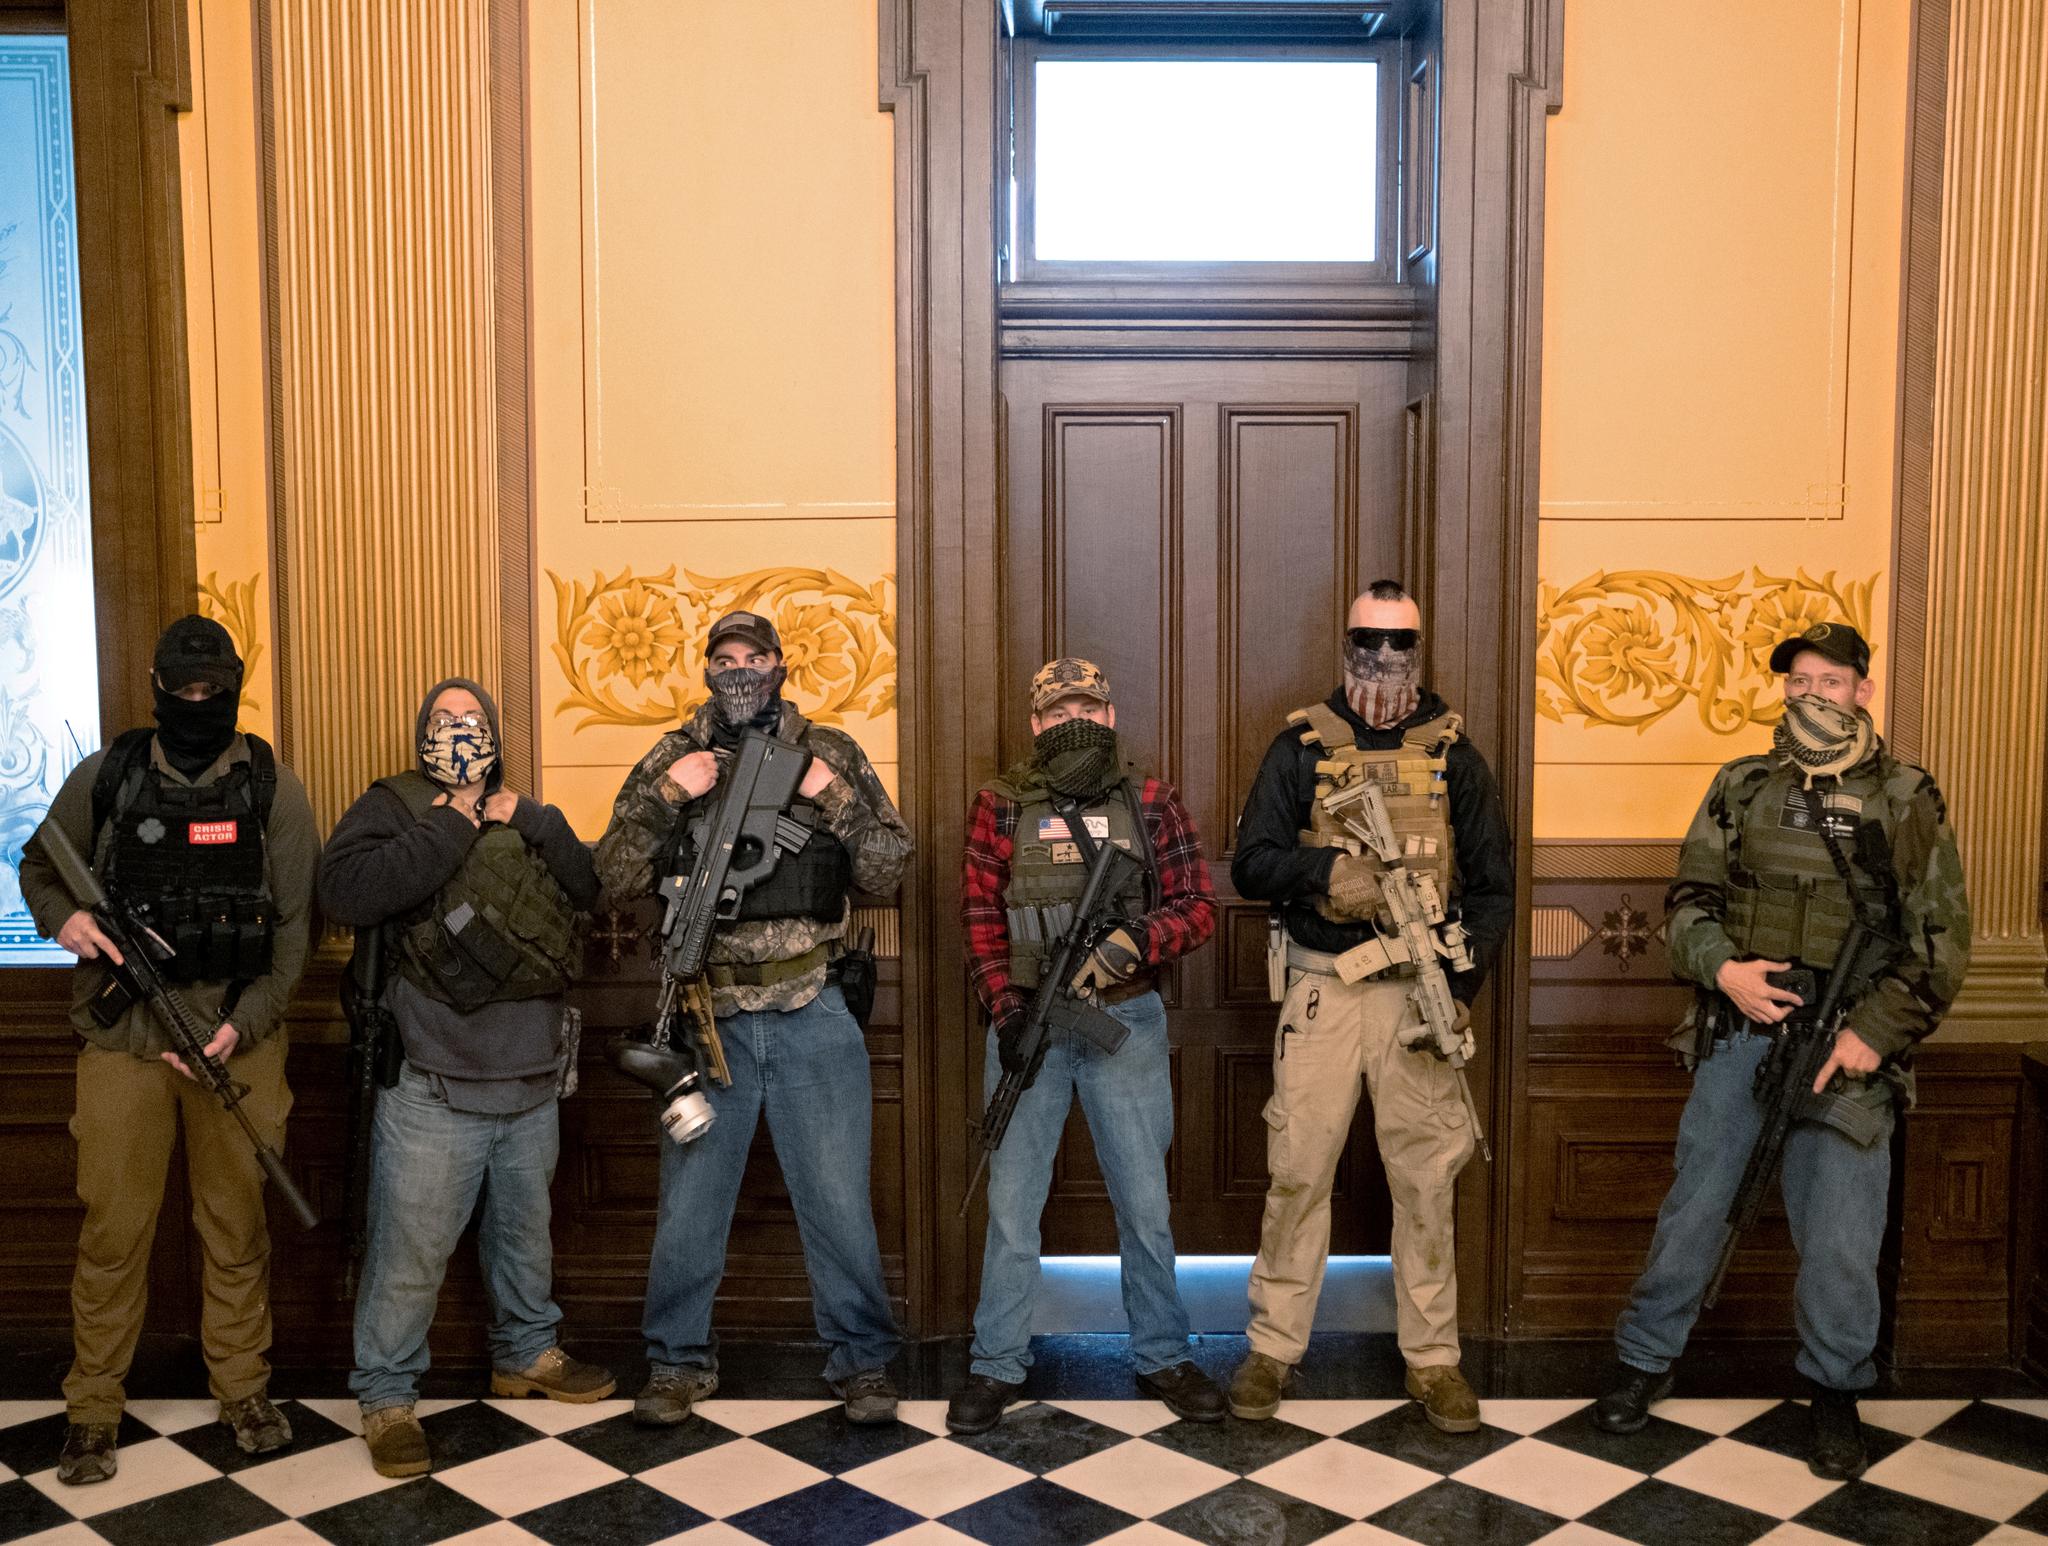 Militsmedlemmer tar seg inn i delstatskongressen i Michigan, i protest mot smittevernstiltak.